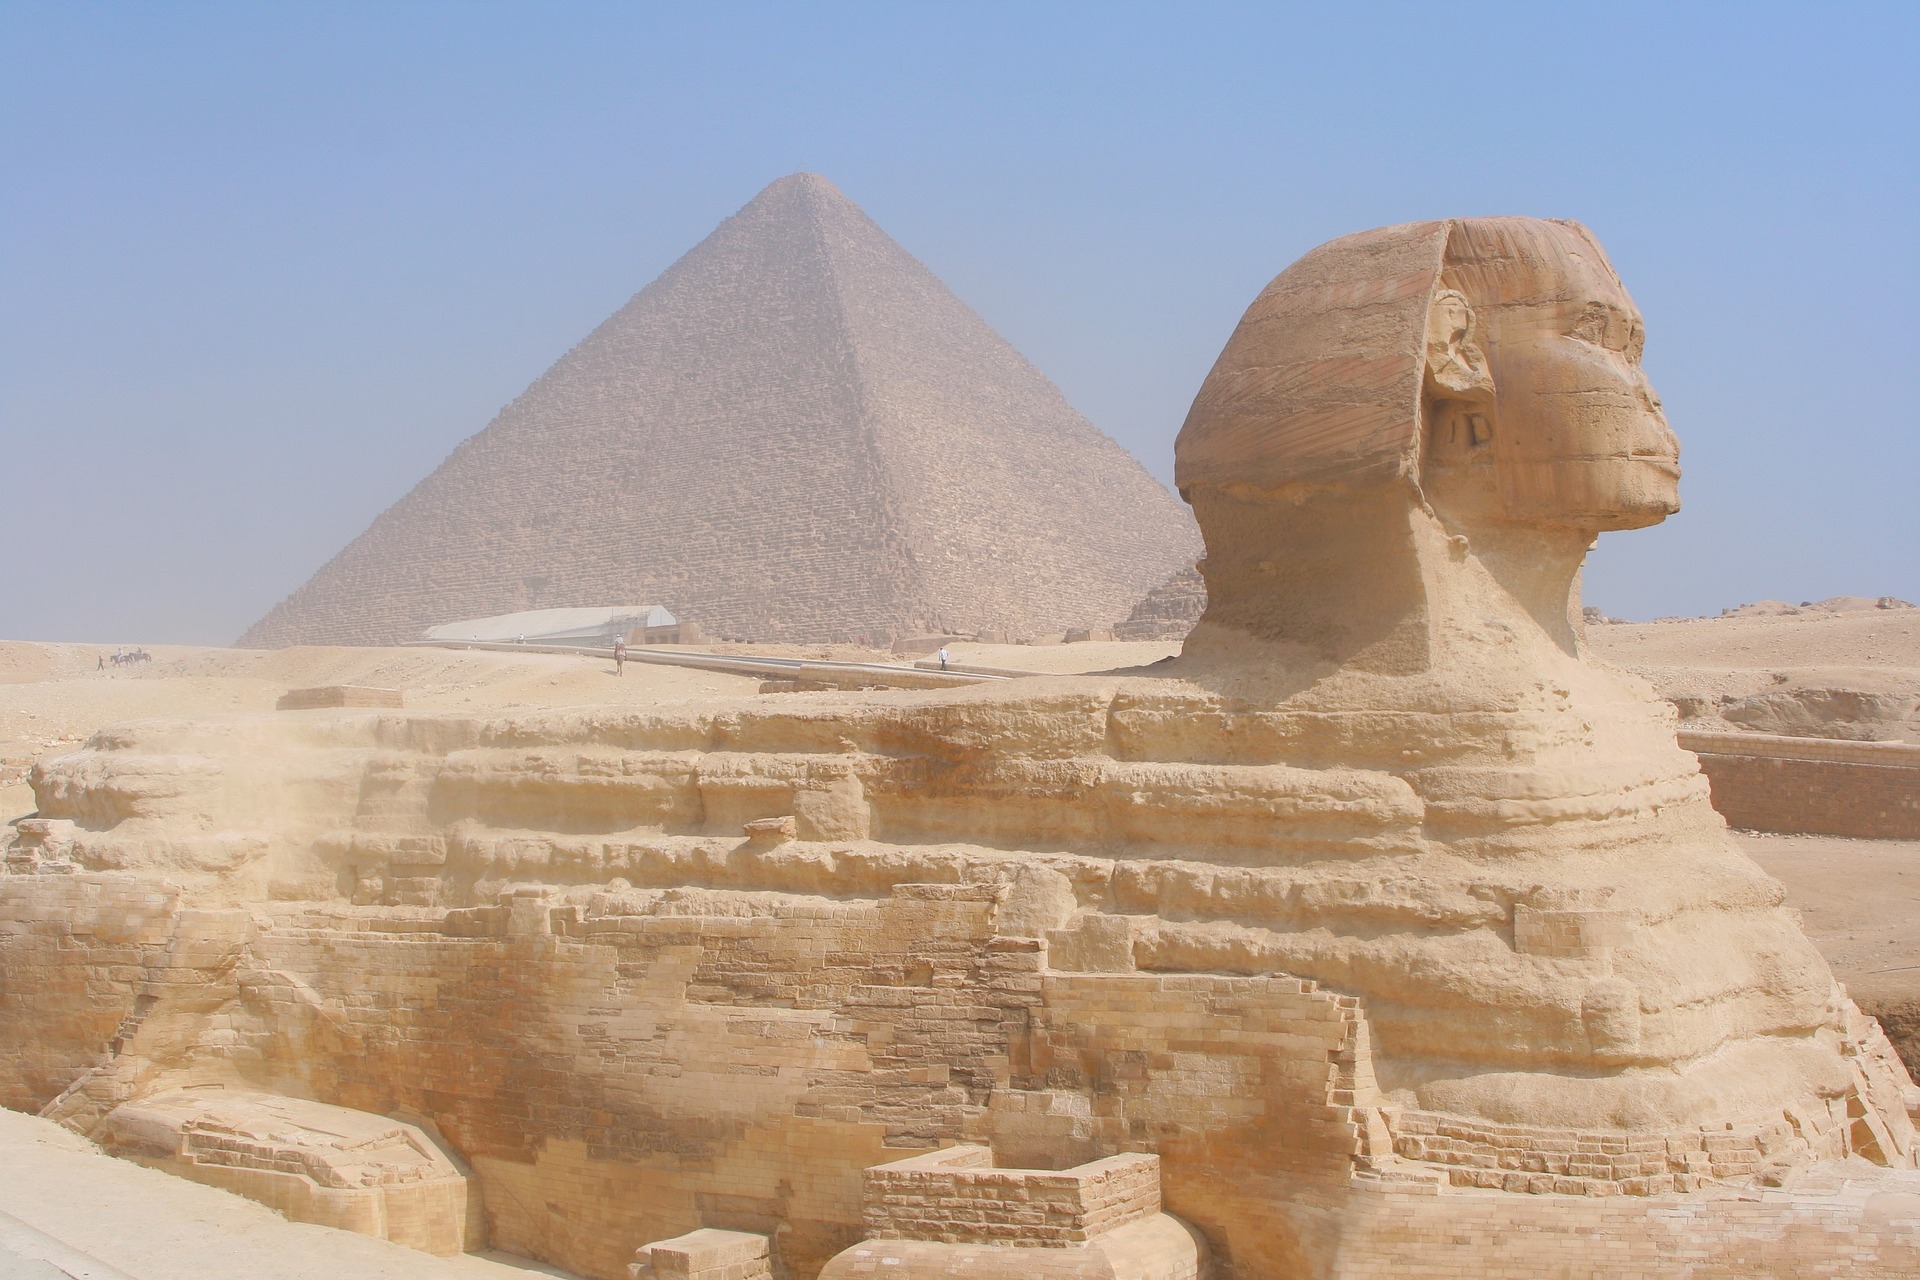 Sphinx at the Pyramids at Giza, Egypt